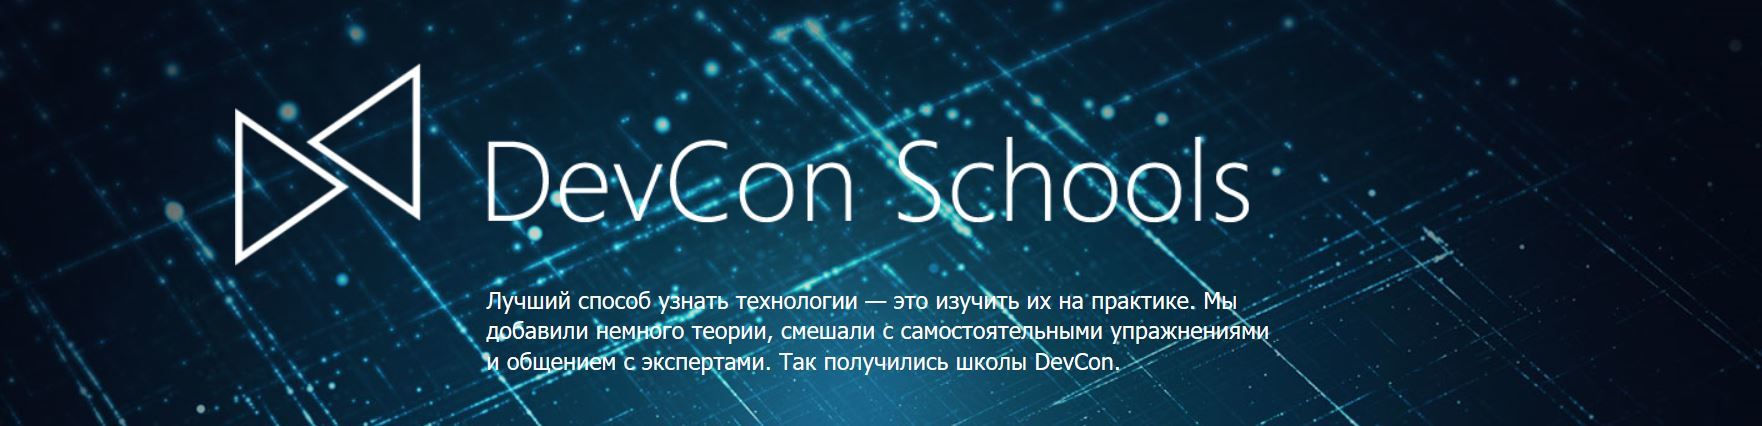 Школа DevCon: Технологии будущего, 1 ноября (Москва) - 1